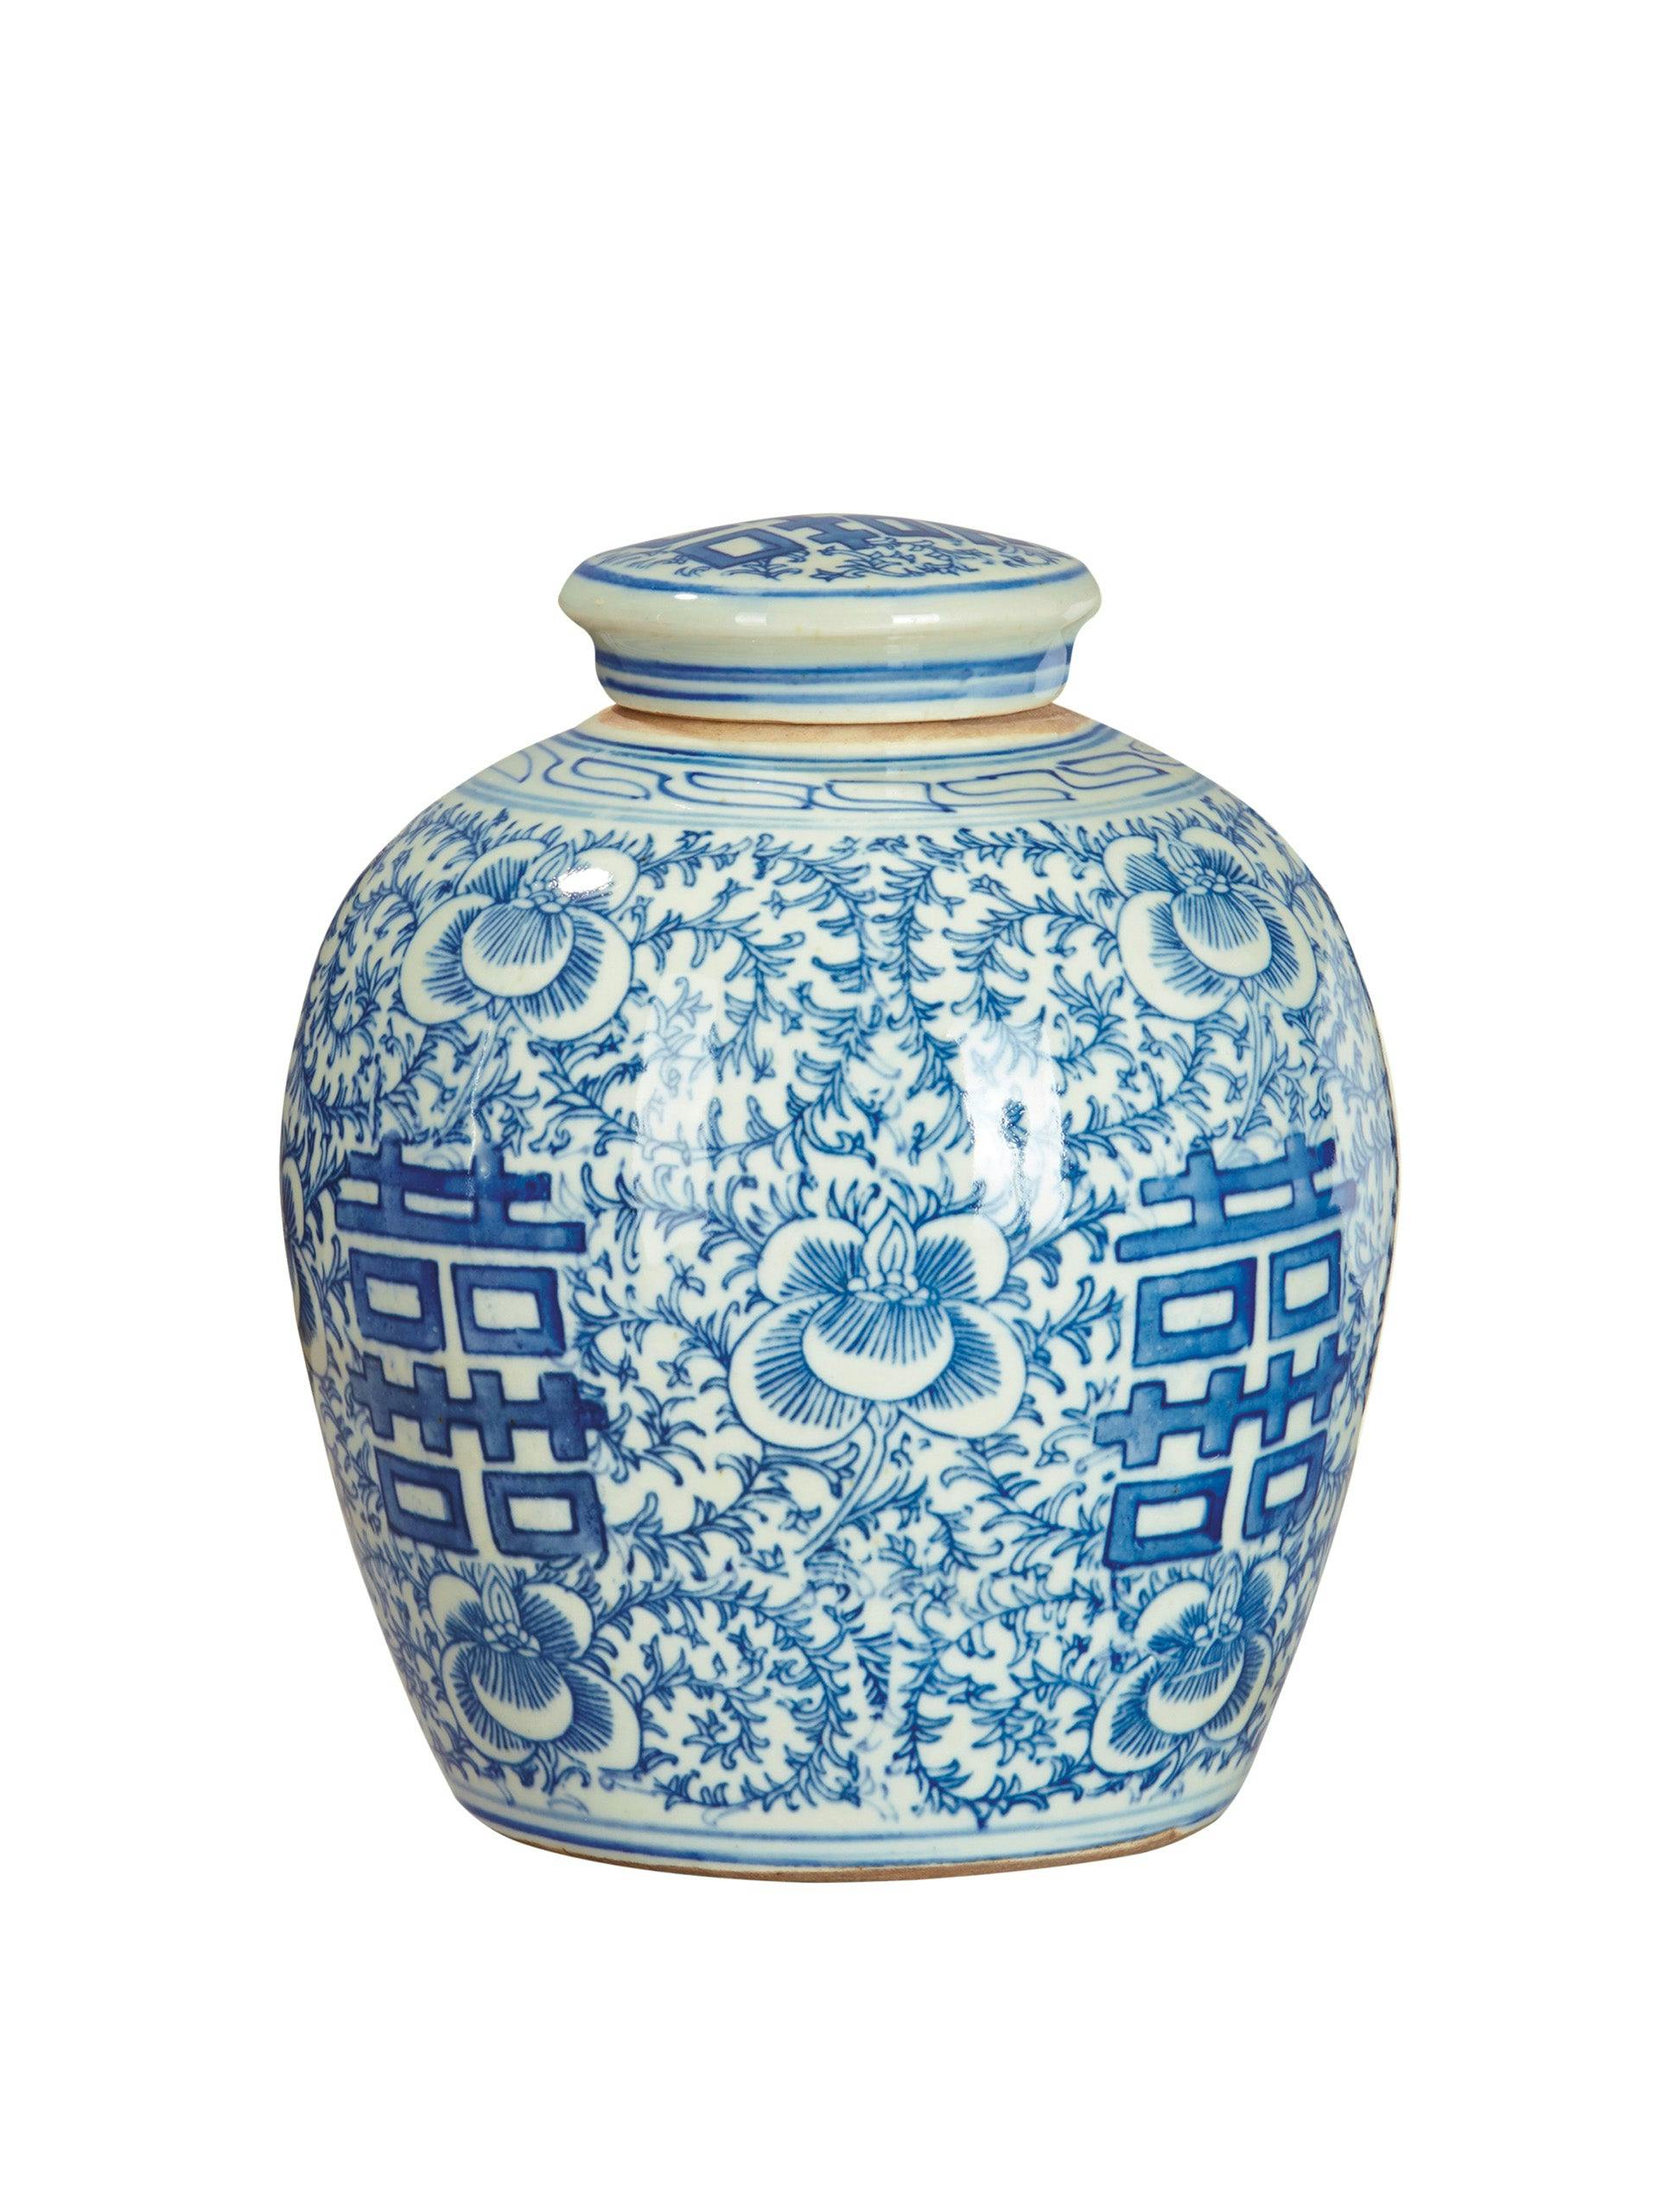 Minxian blue round jar